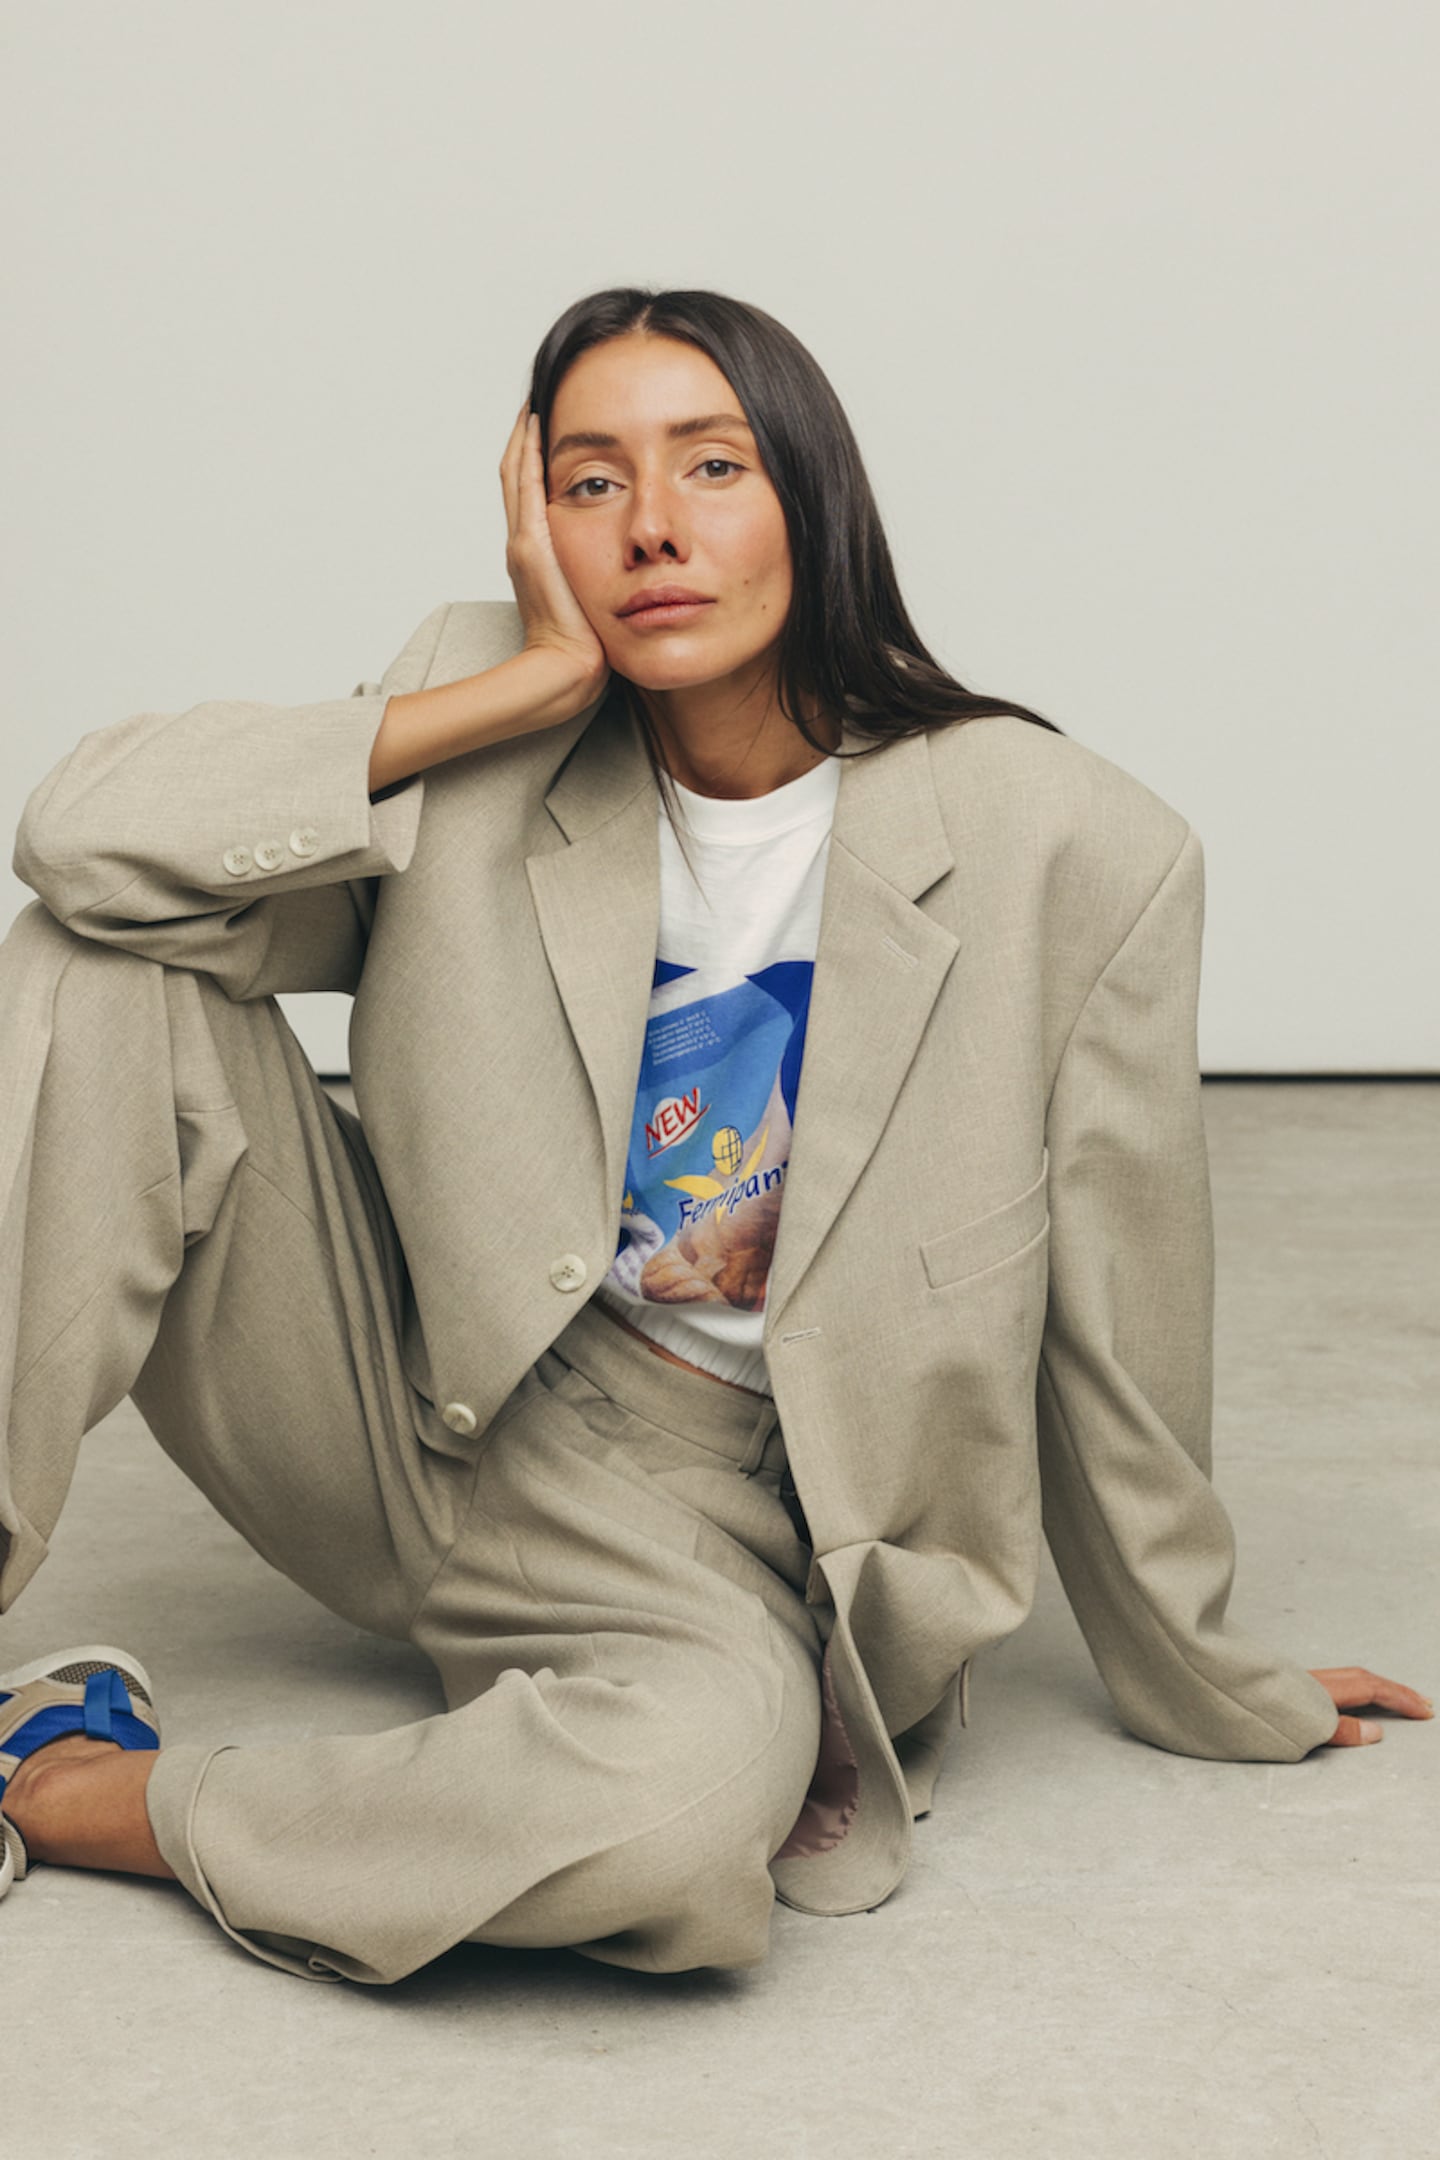 A portrait of Julie former Vogue Ukraine fashion director and Better founder Julie Pelipas in a loose fitting grey suit.